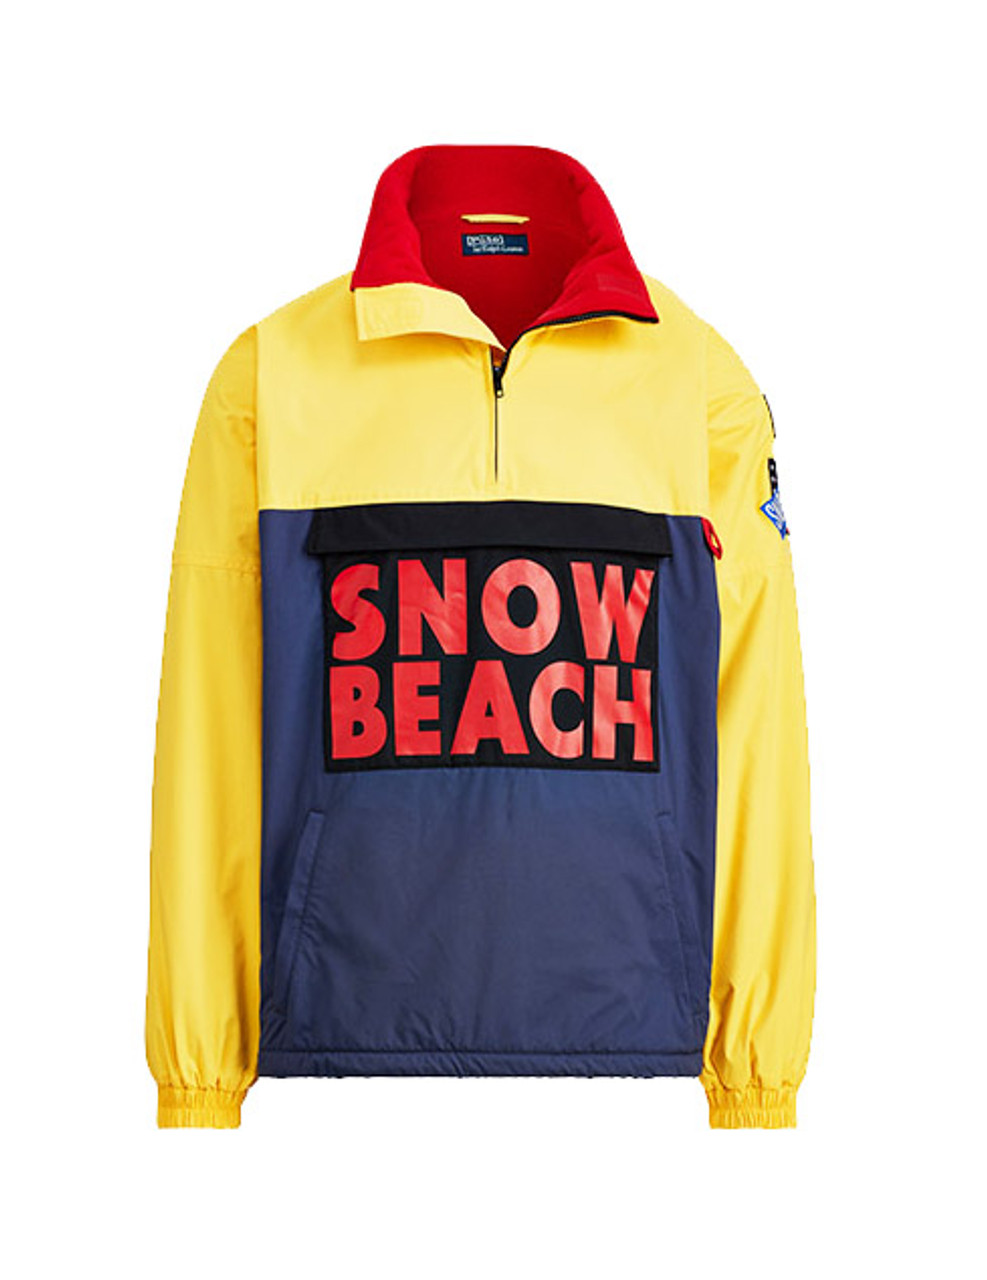 Snow Beach Ralph Lauren Cotton Jacket